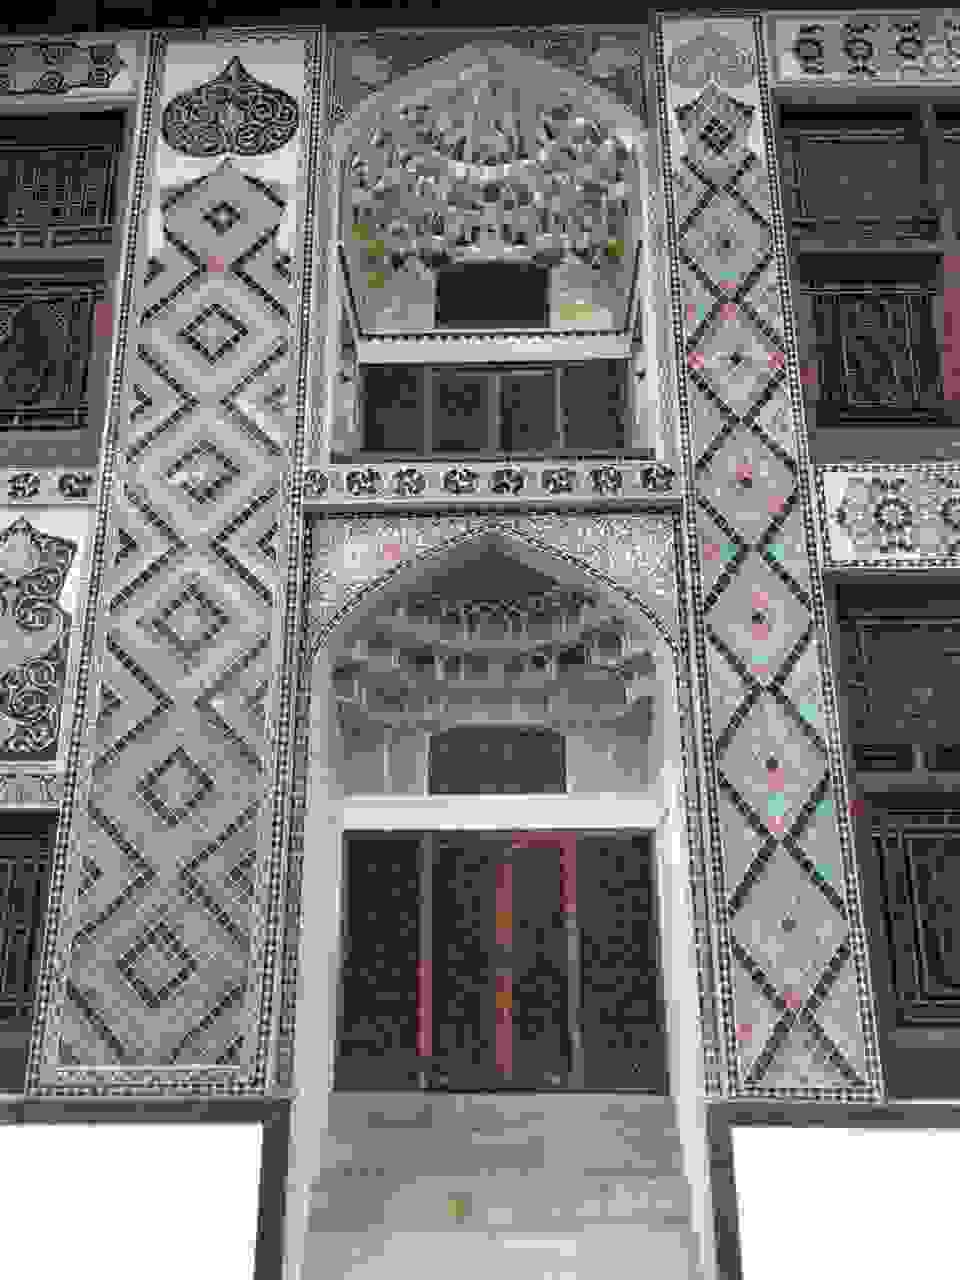 Khansaray windows